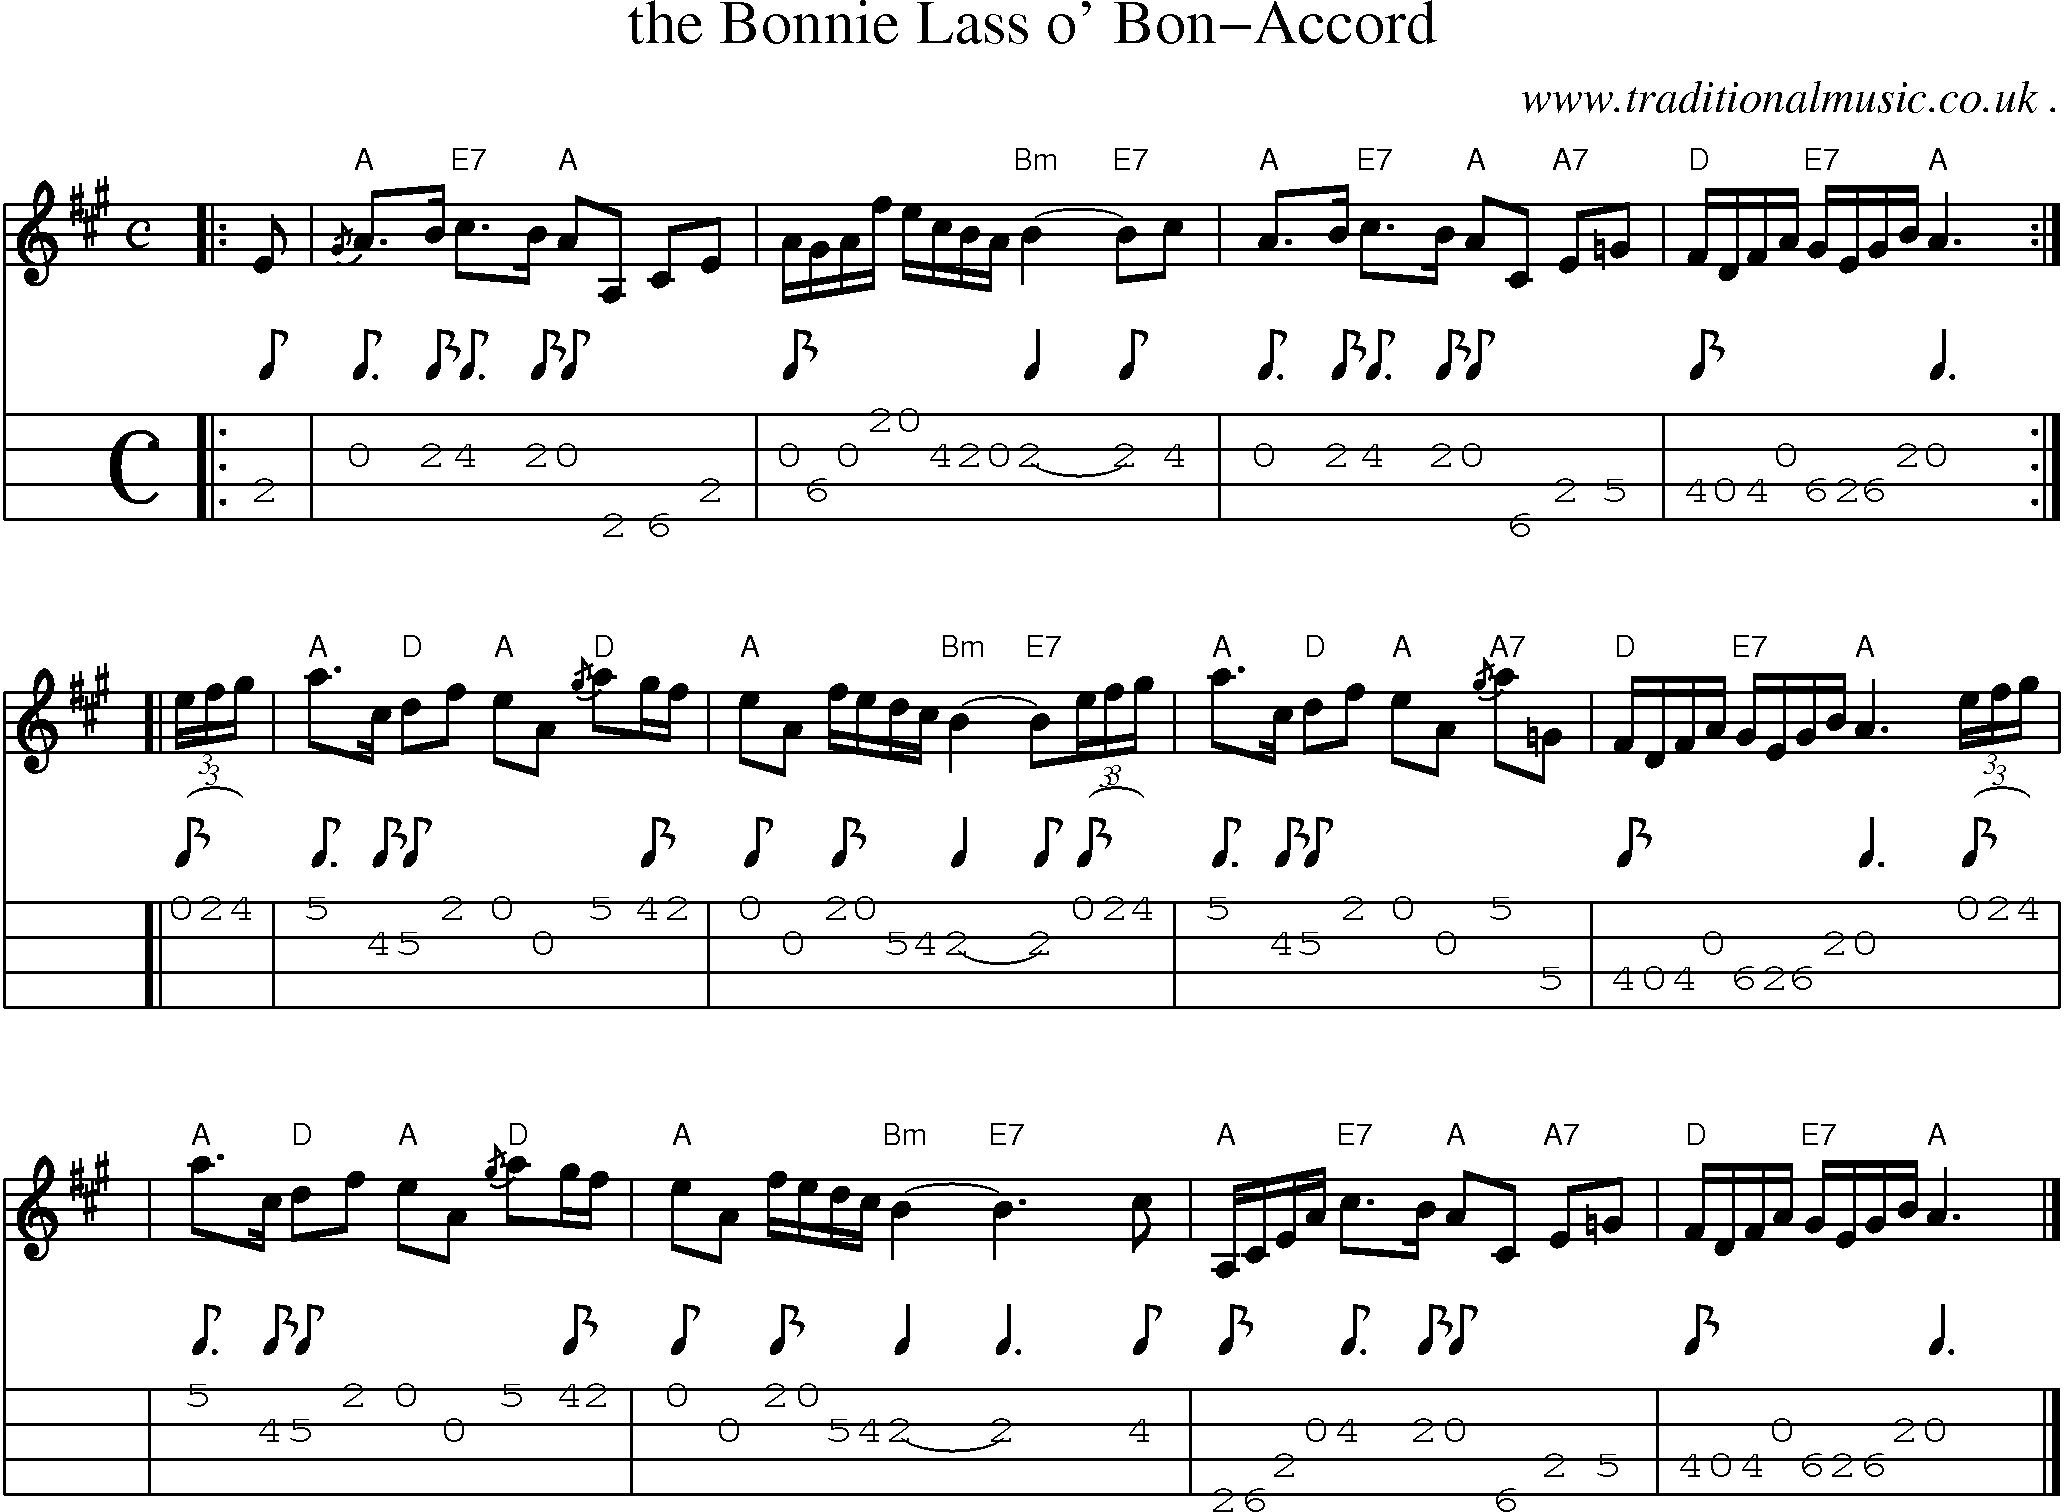 Sheet-music  score, Chords and Mandolin Tabs for The Bonnie Lass O Bon-accord